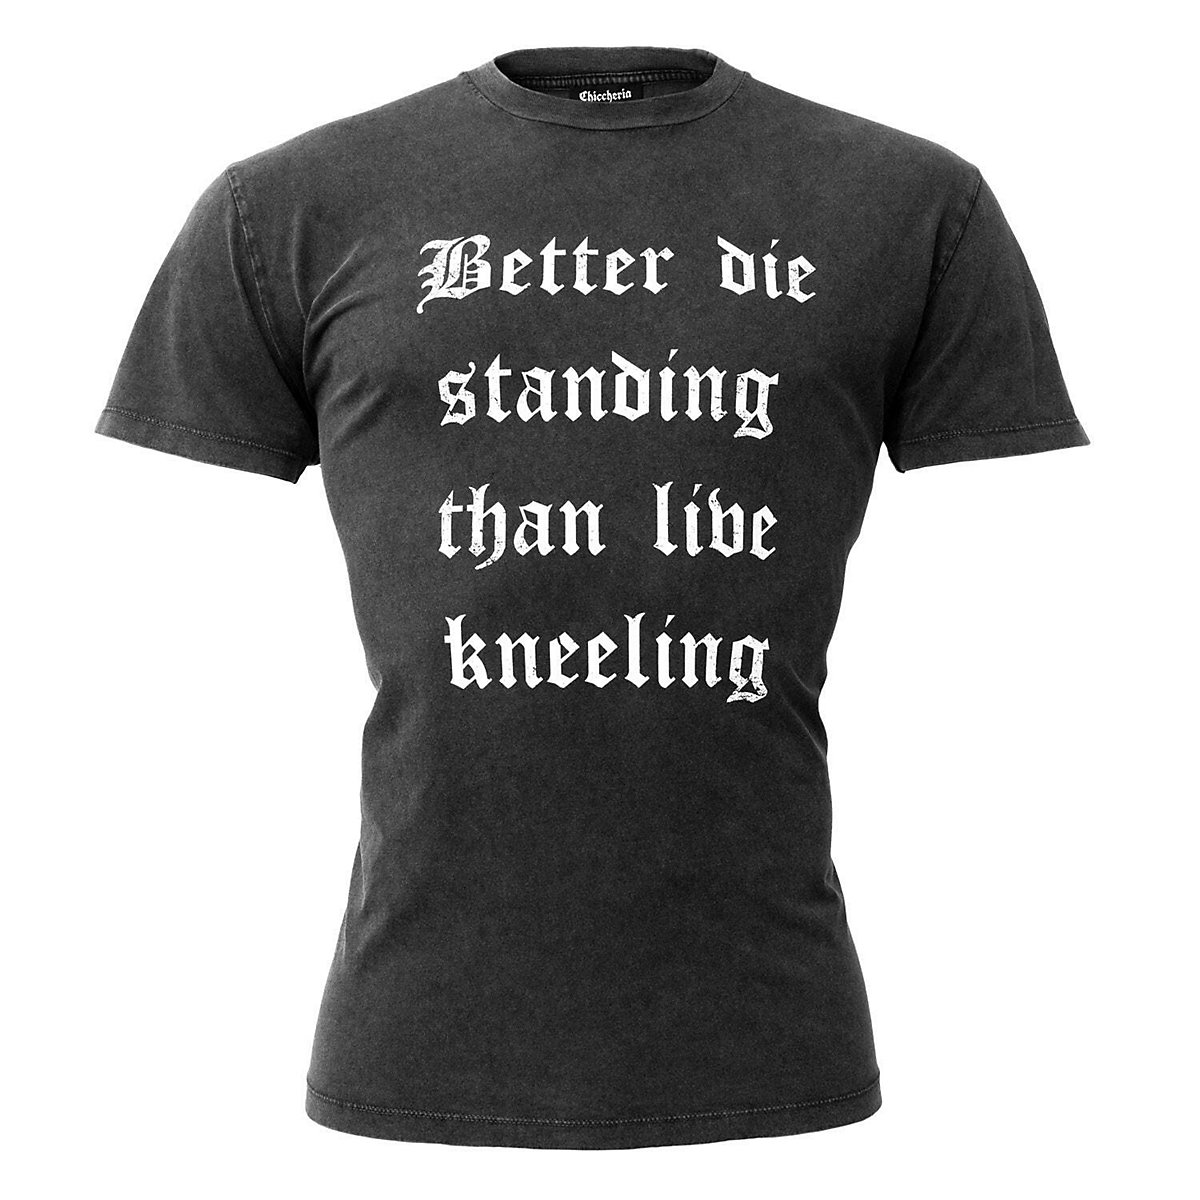 Chiccheria Brand T-Shirt Better Die Standing grau